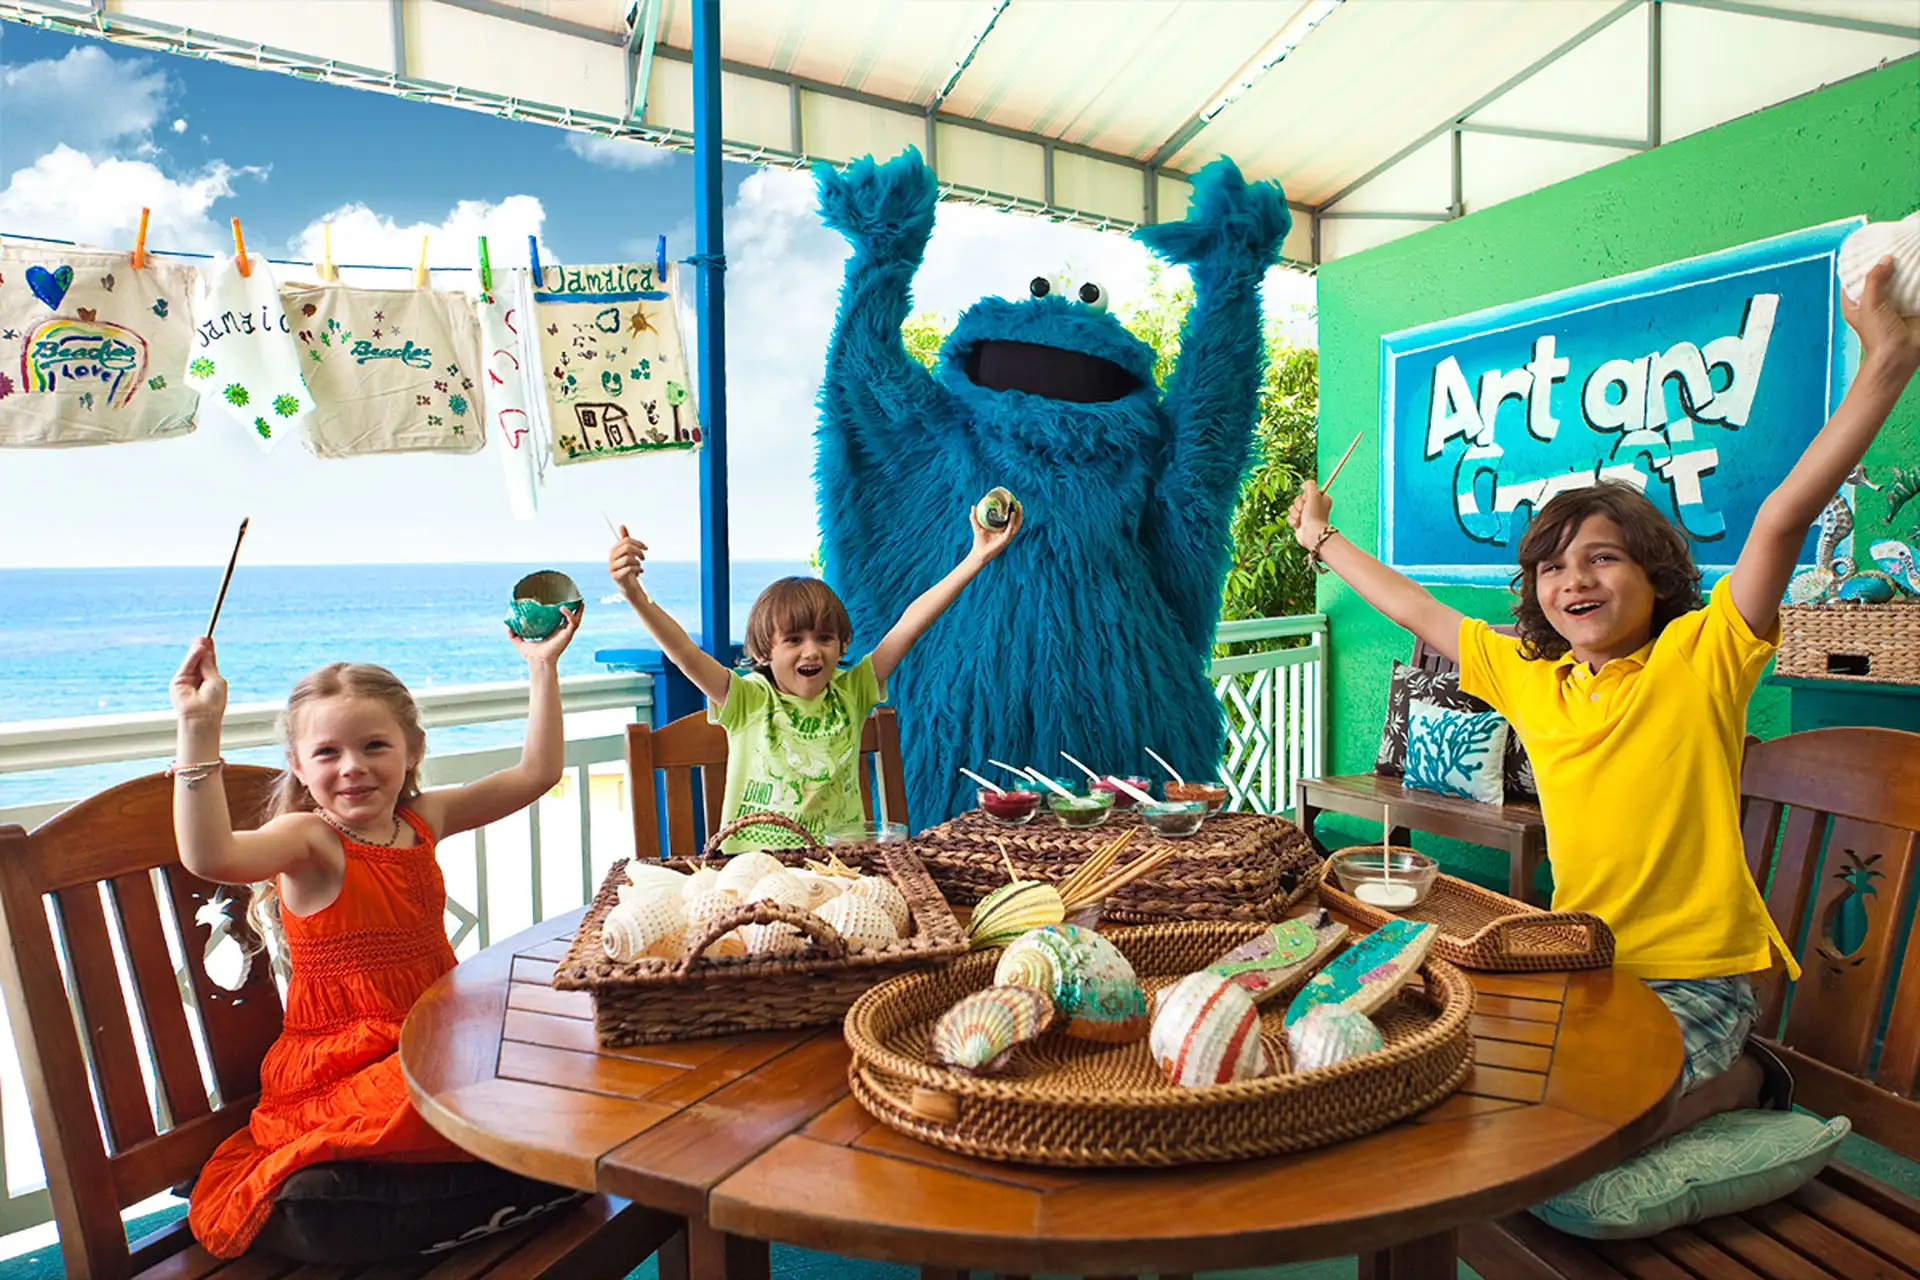 Beaches Sesame Street Program; Courtesy of Beaches Resorts